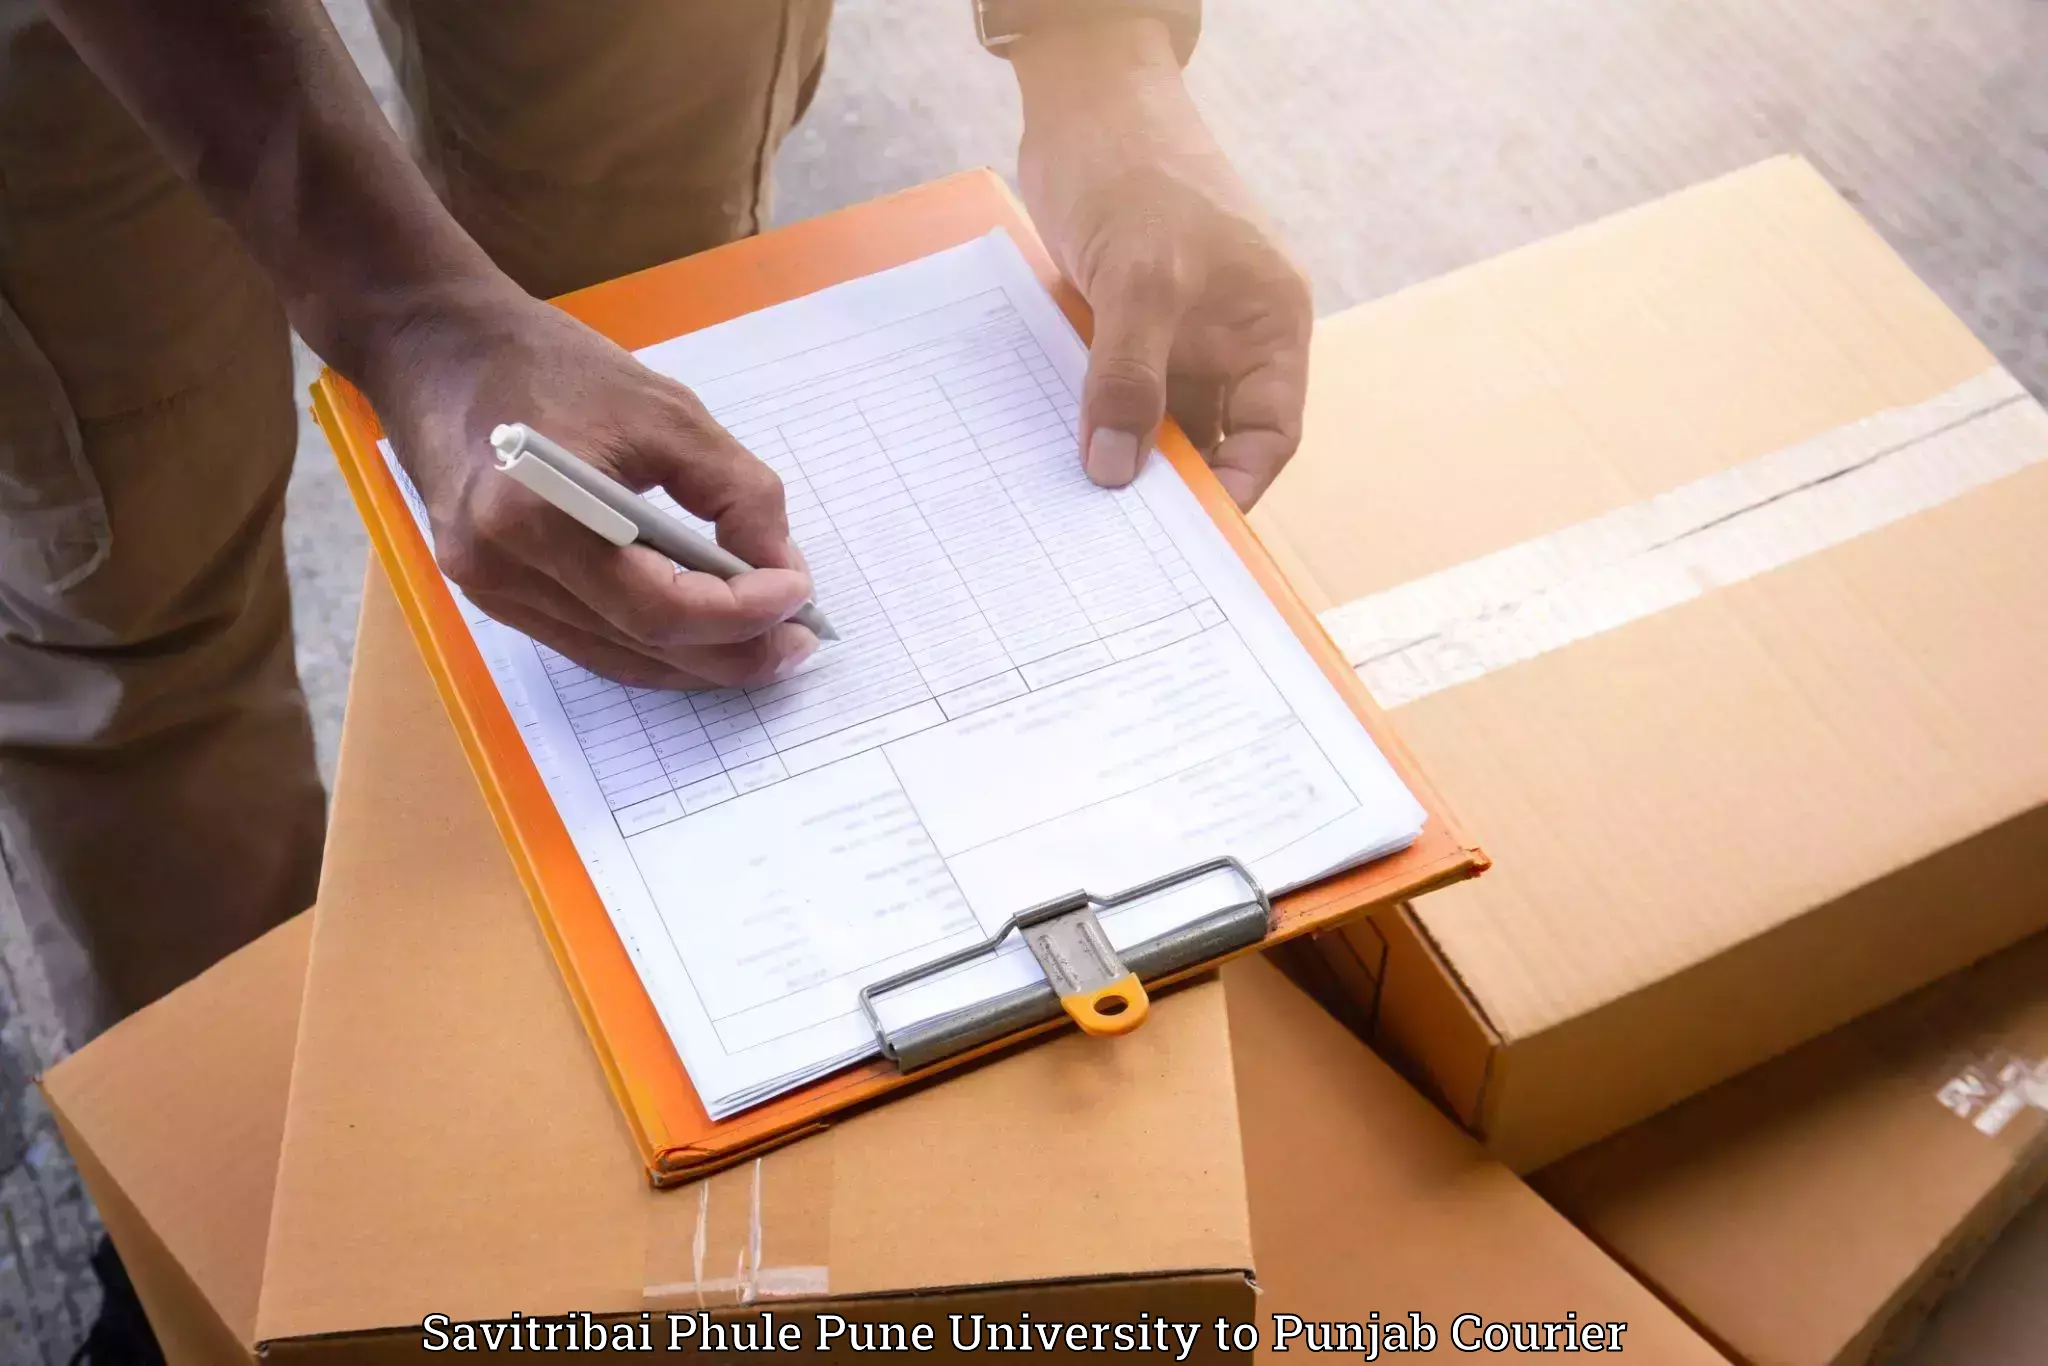 Furniture delivery service Savitribai Phule Pune University to Punjab